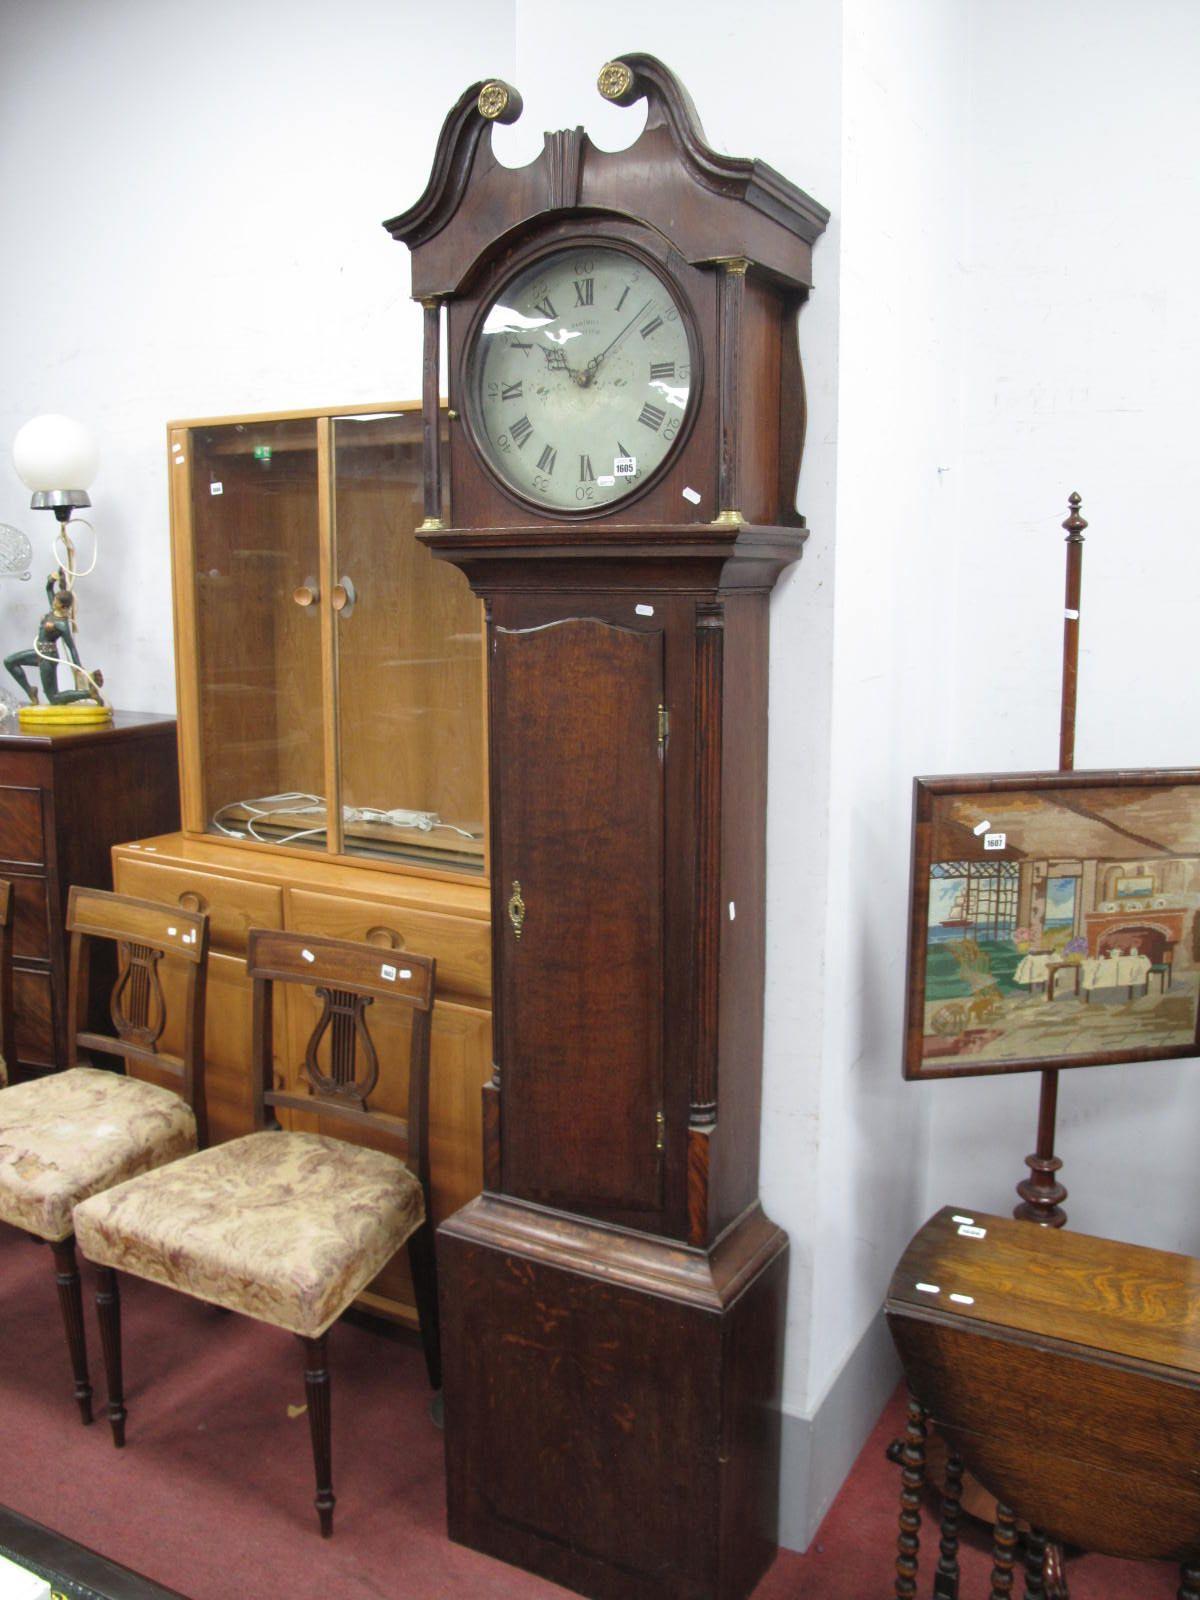 A Late XVIII Century Early XIX Century 30 Hour Oak Long Case Clock, 'Sam Hill Sheffield, The